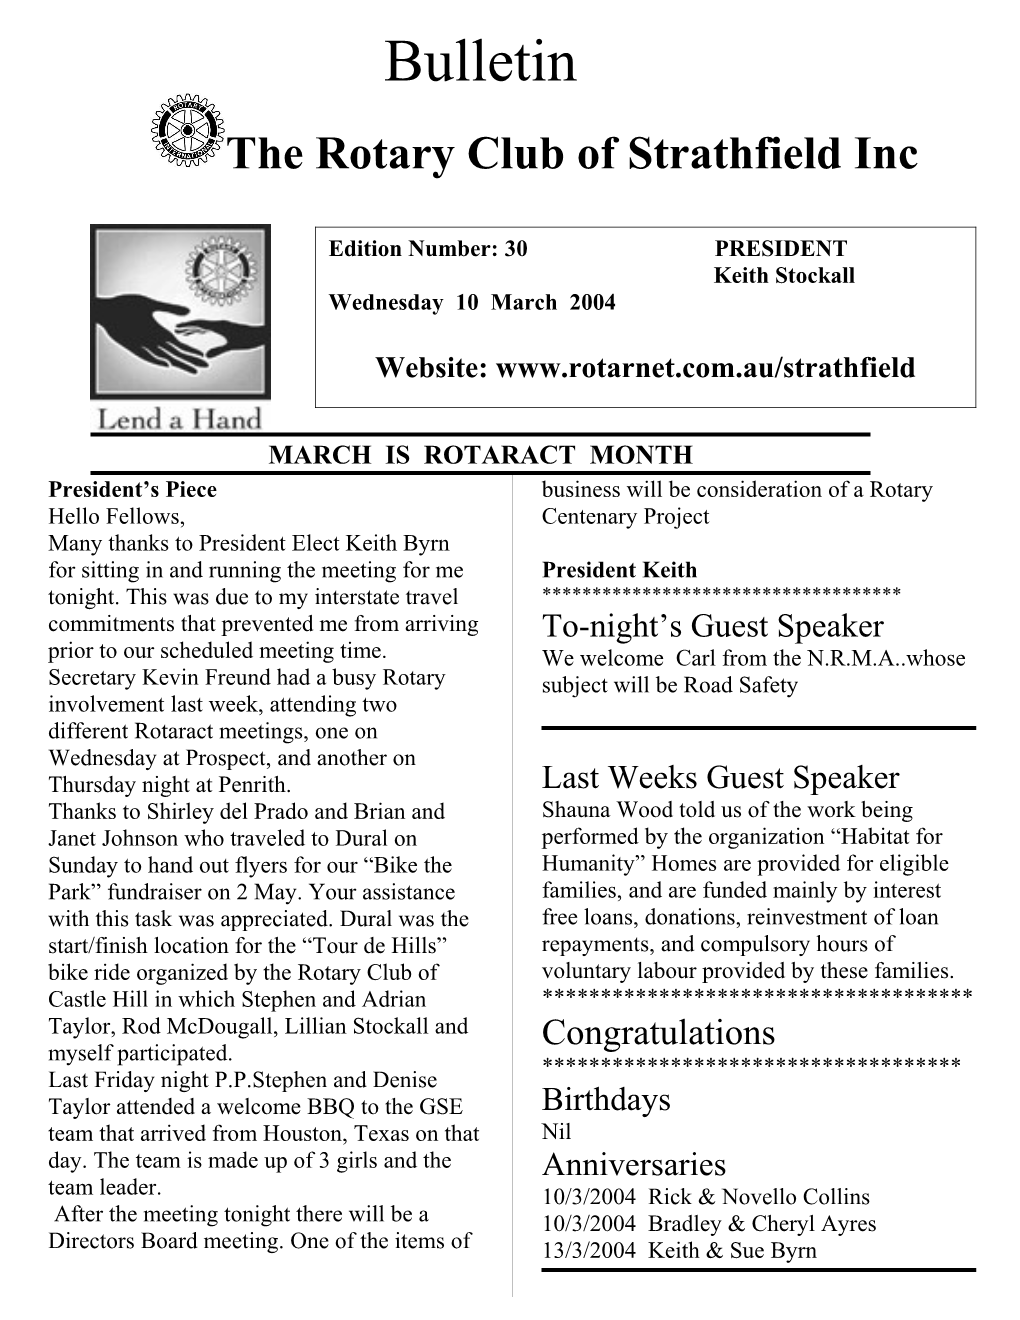 The Rotary Club of Strathfield Inc s1